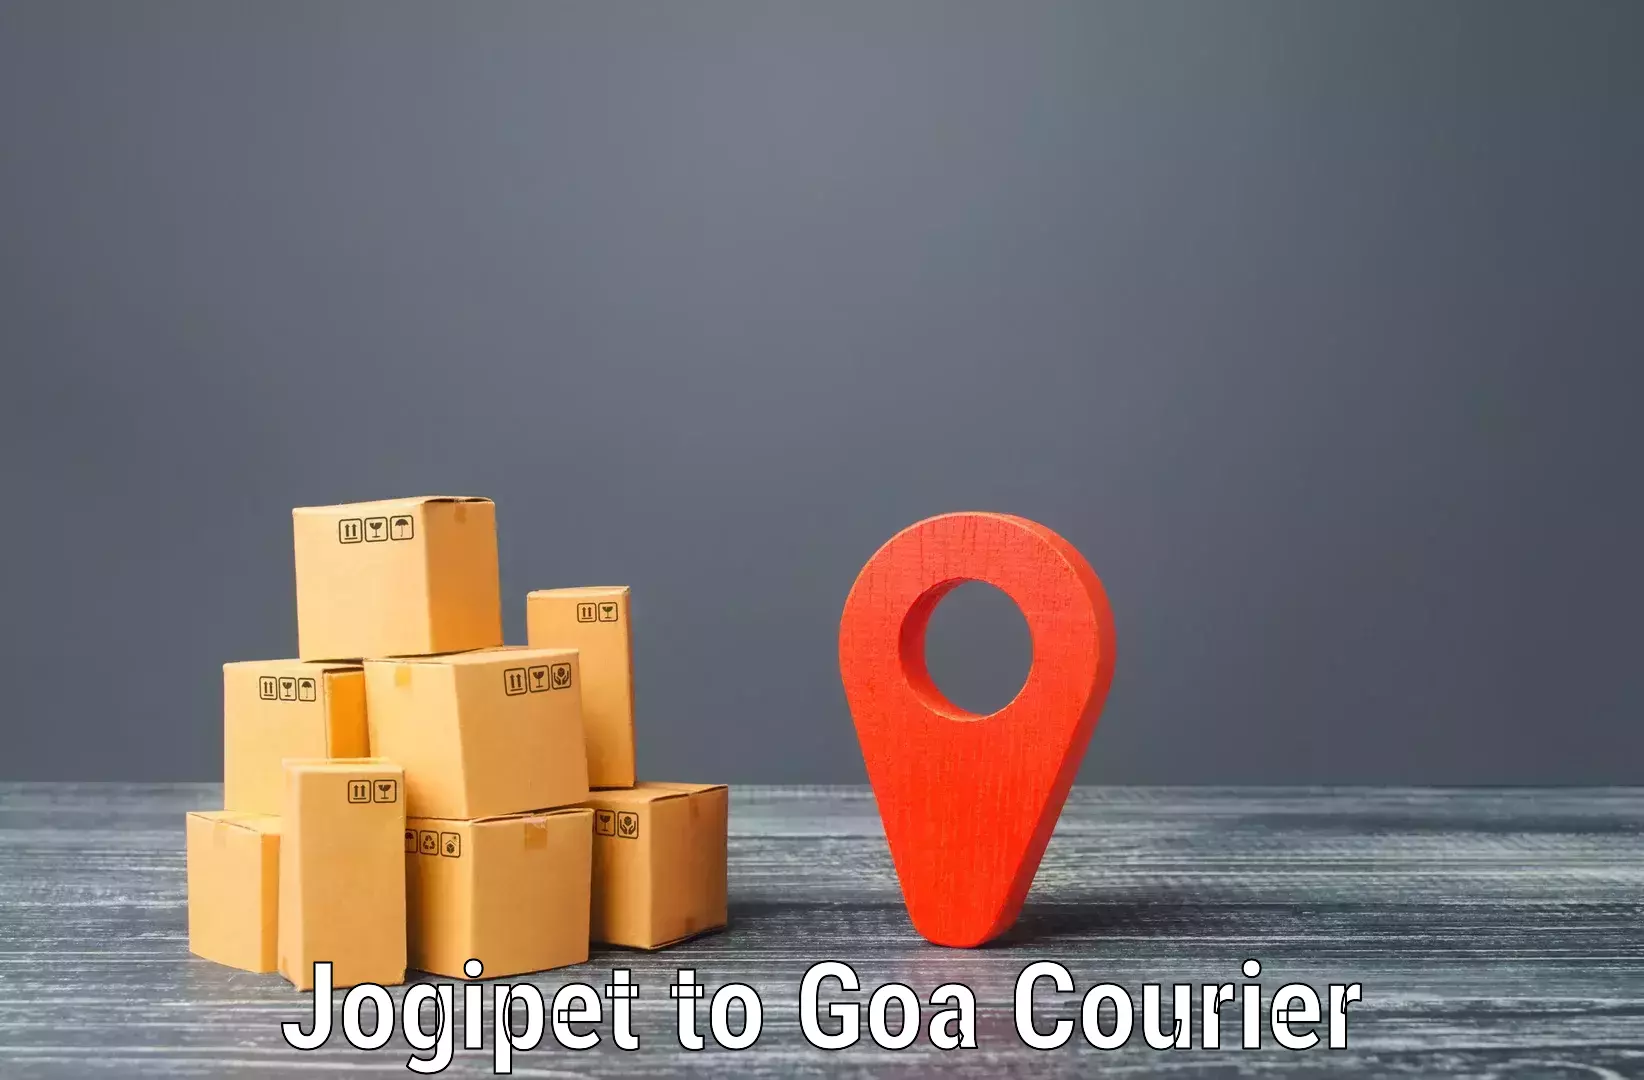 Global logistics network Jogipet to Goa University